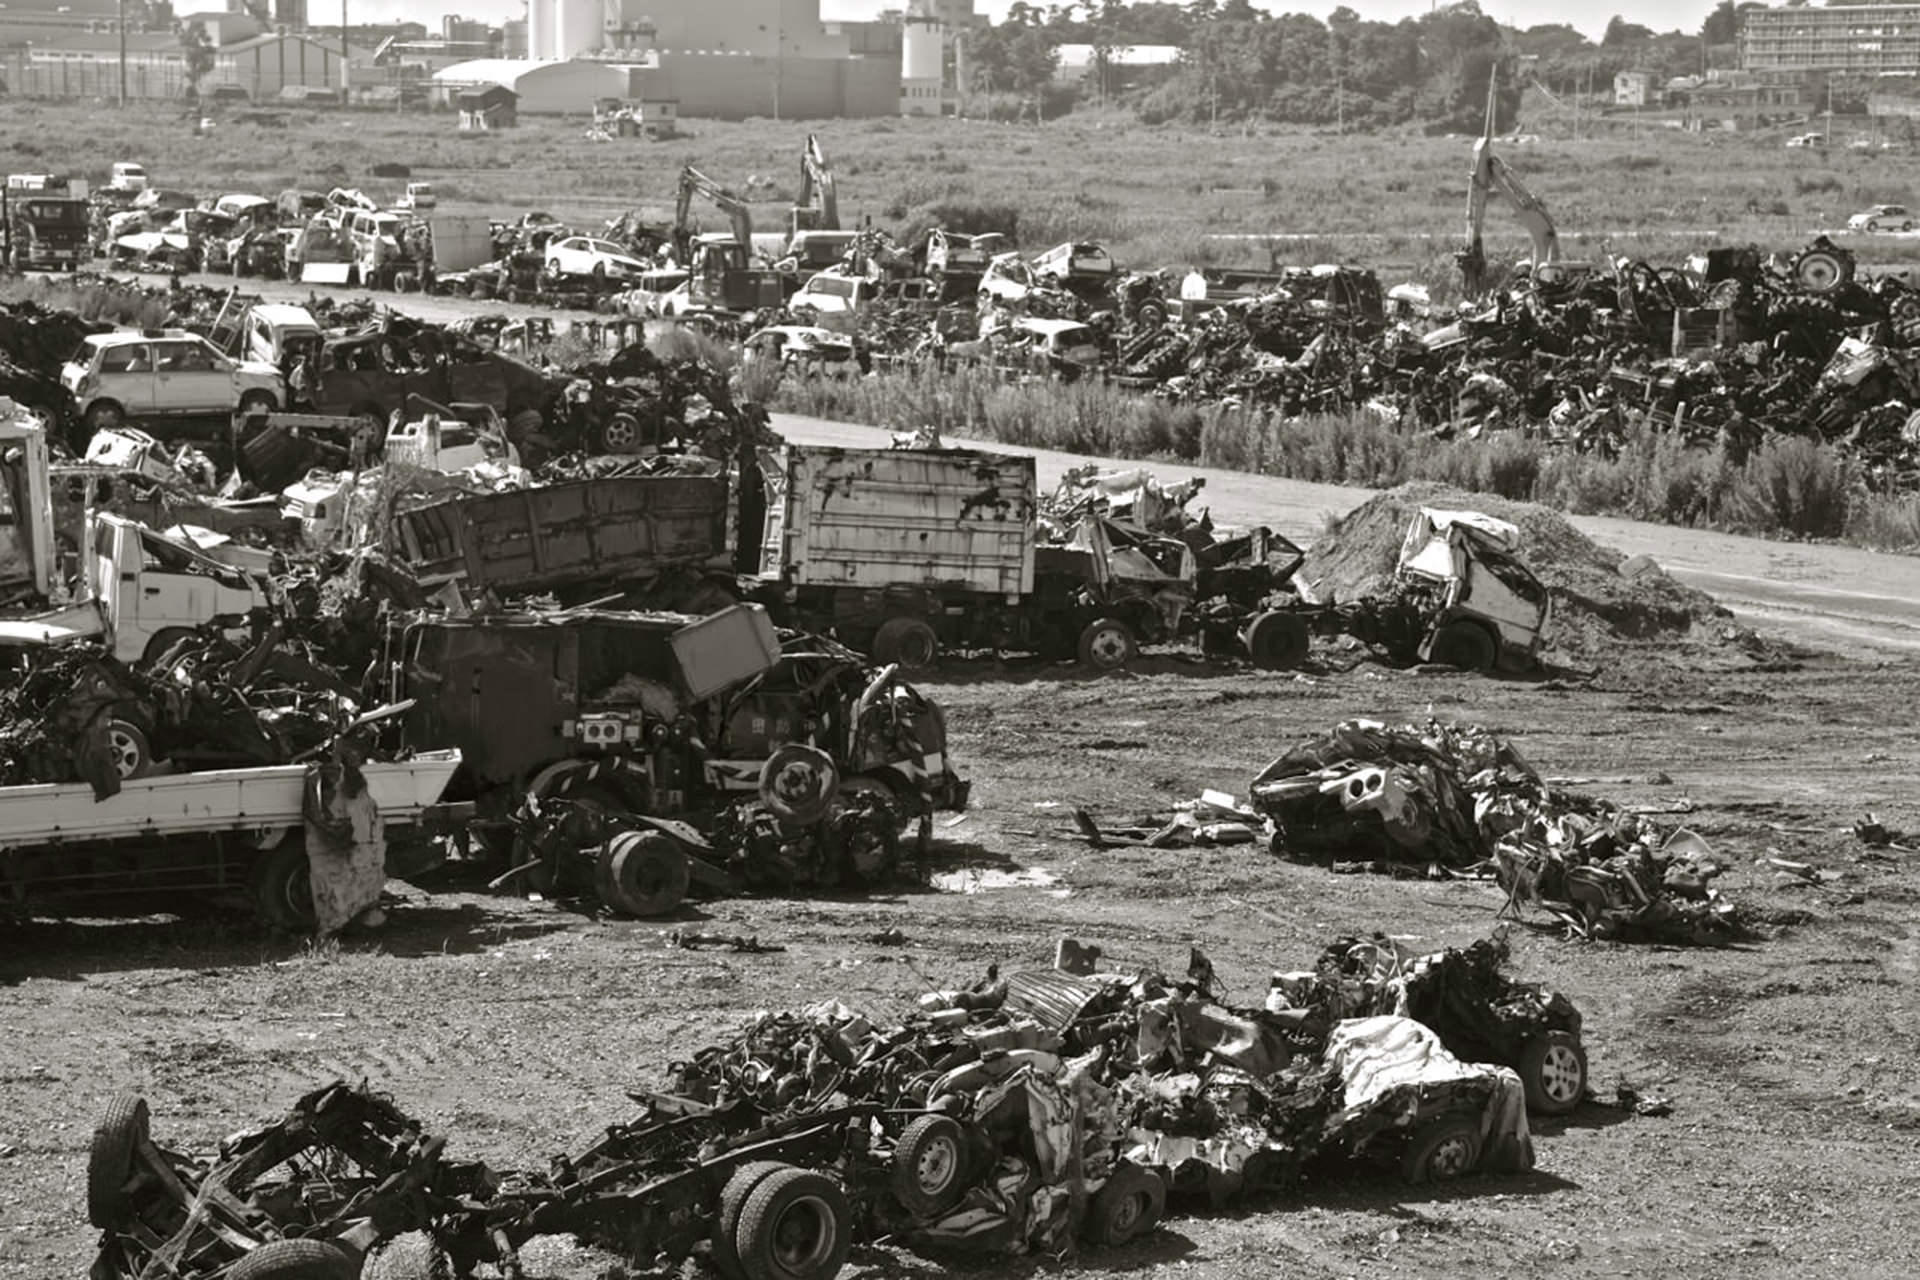 Graveyard of cars